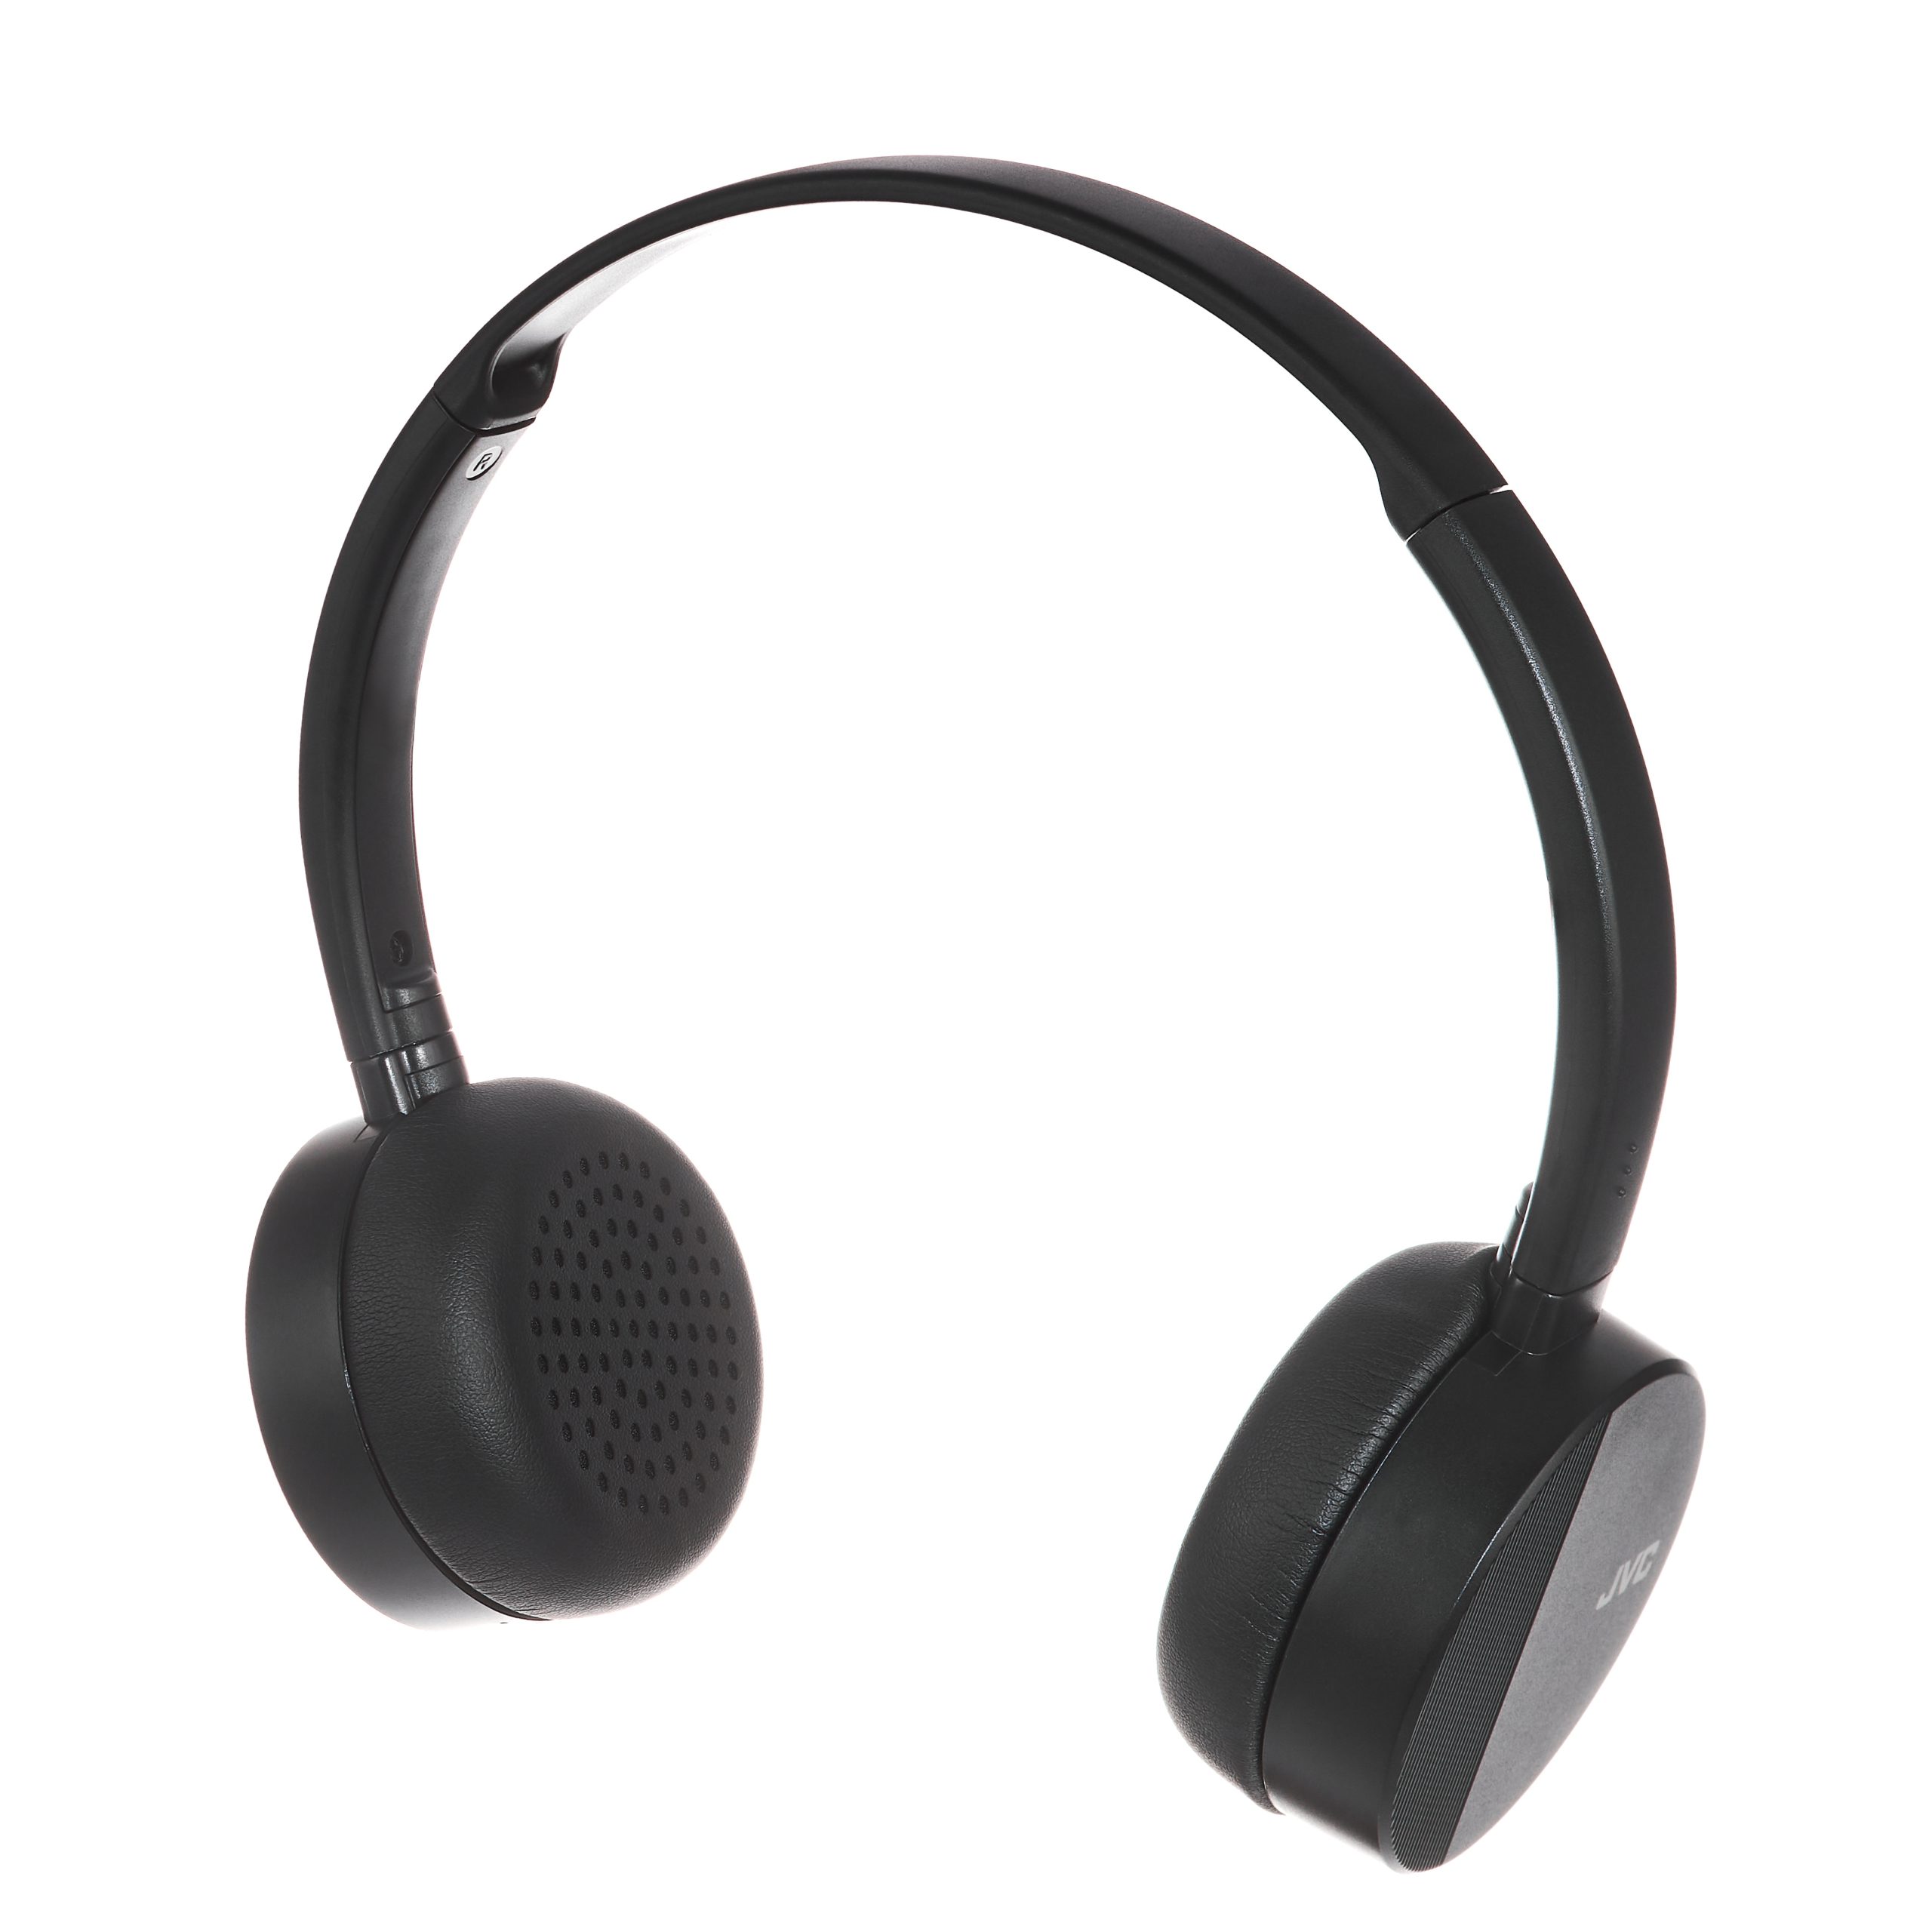 JVC HA-S24W-Z-U Auriculares Bluetooth Inalámbricos Plegables Color Menta